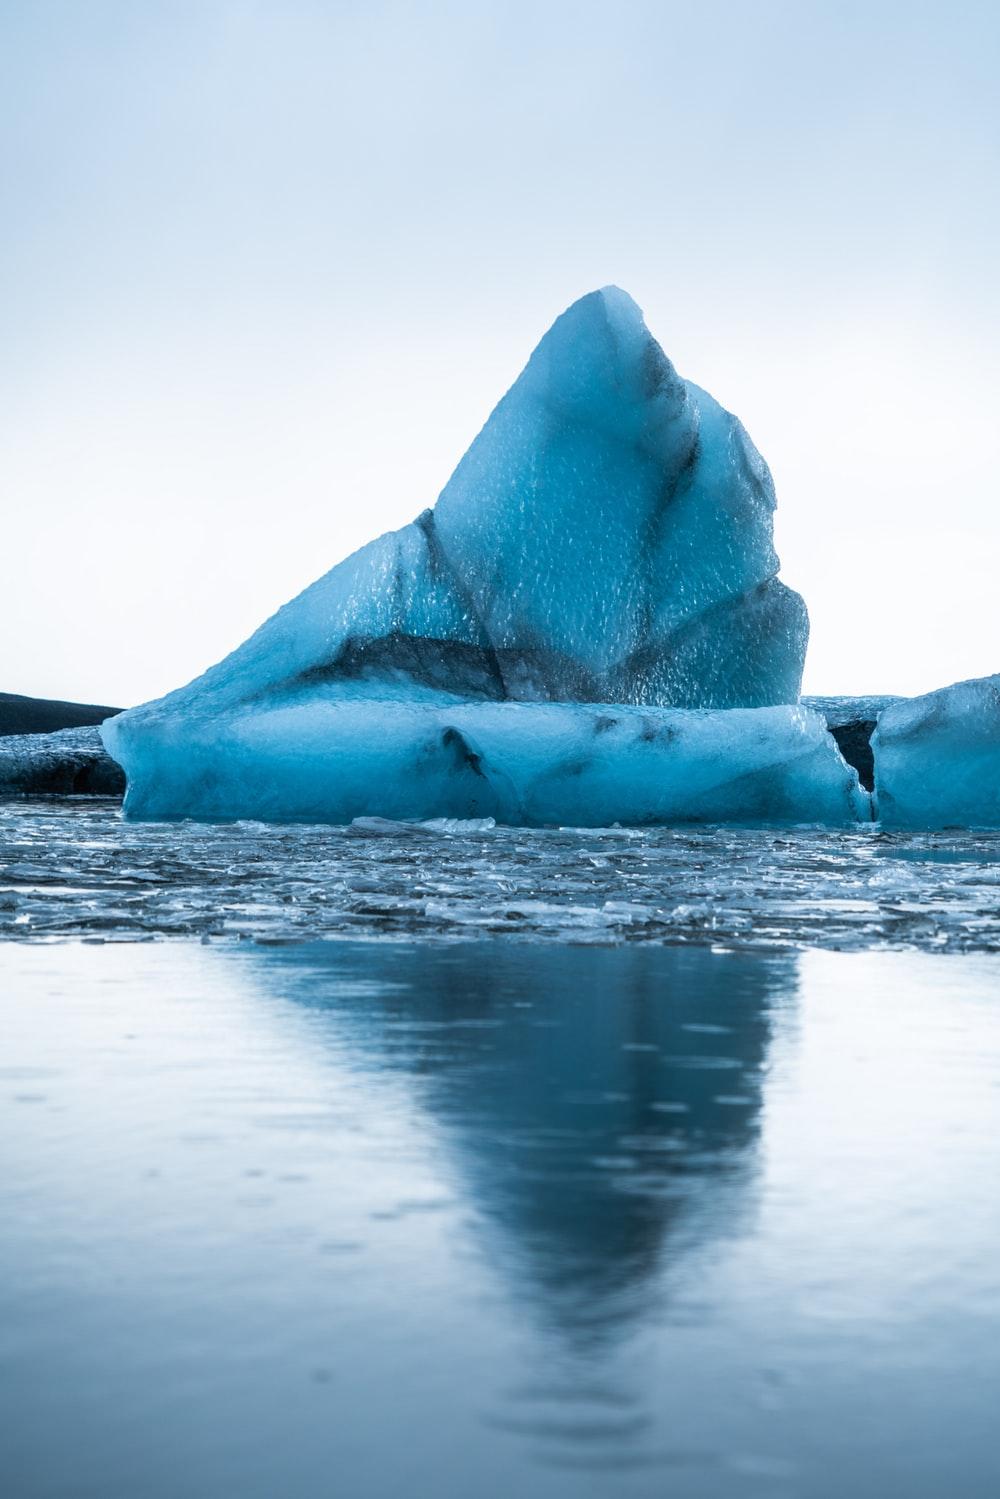 Frozen Ocean Picture. Download Free Image